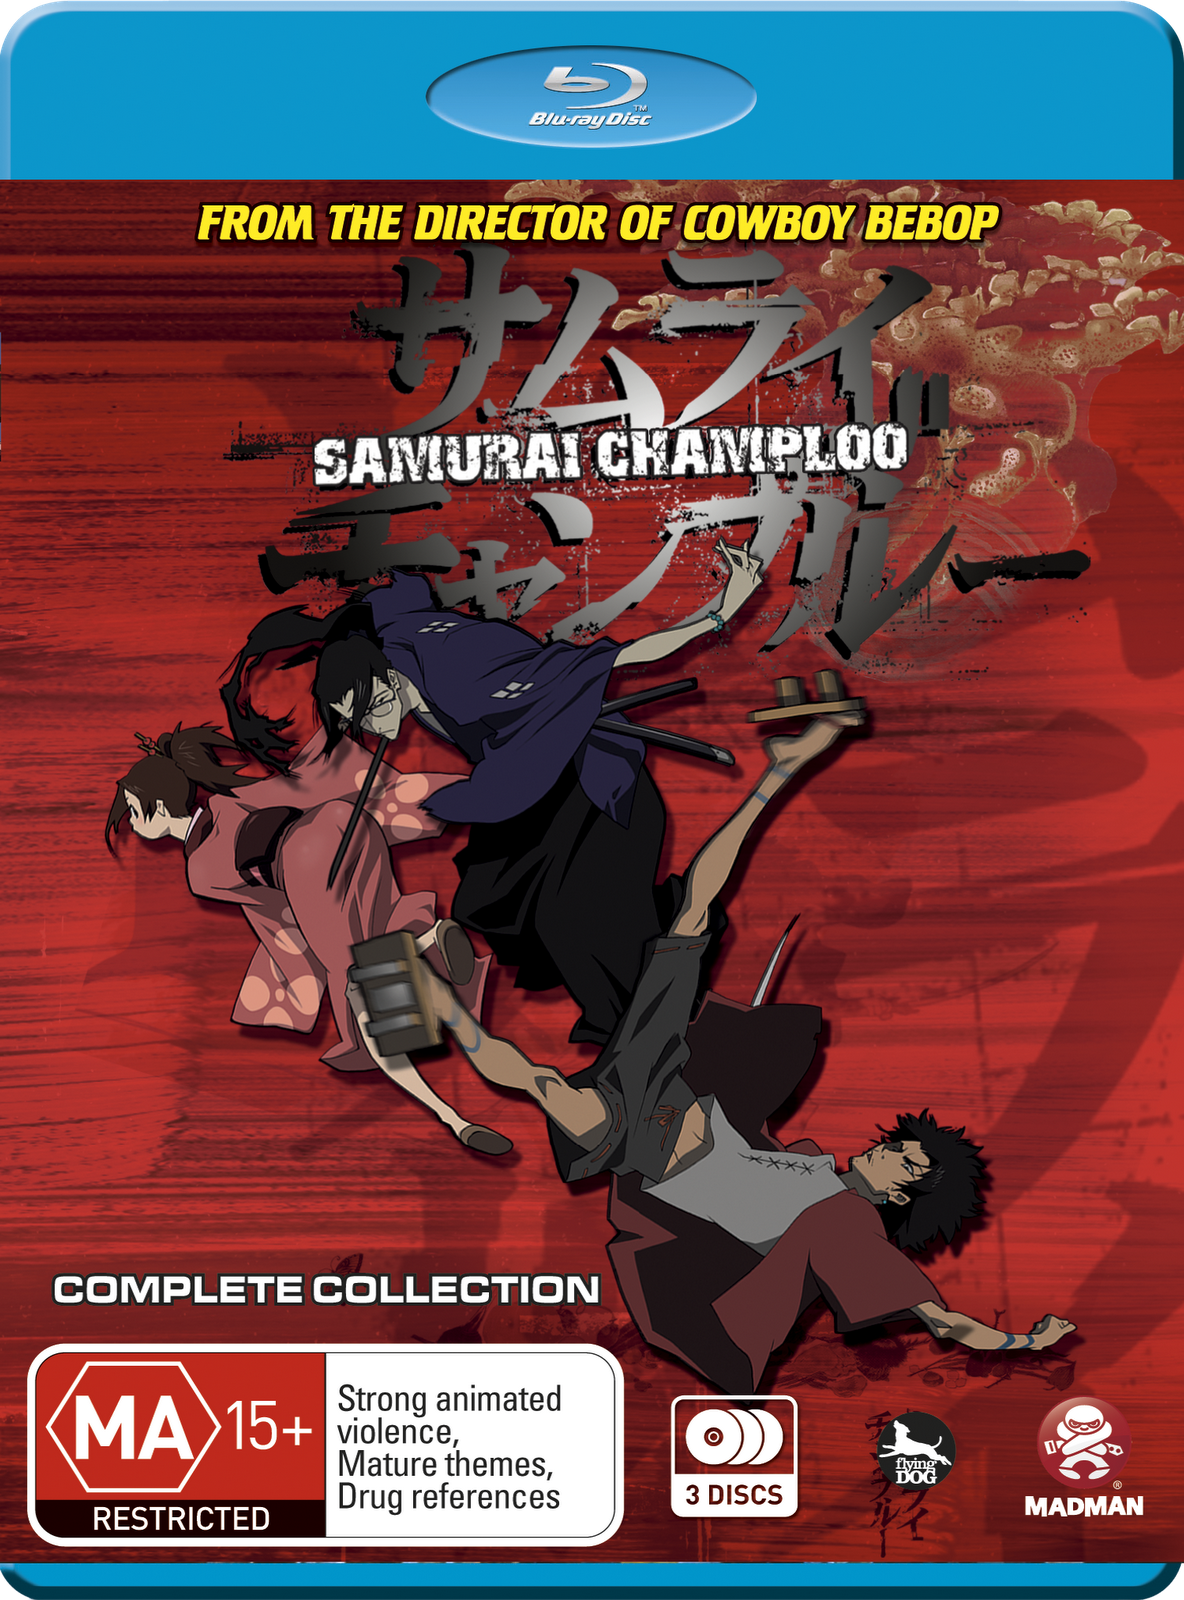 Best Buy: Devil Hunter Yohko, Vol. 2: Complete Collection [3 Discs] [DVD]